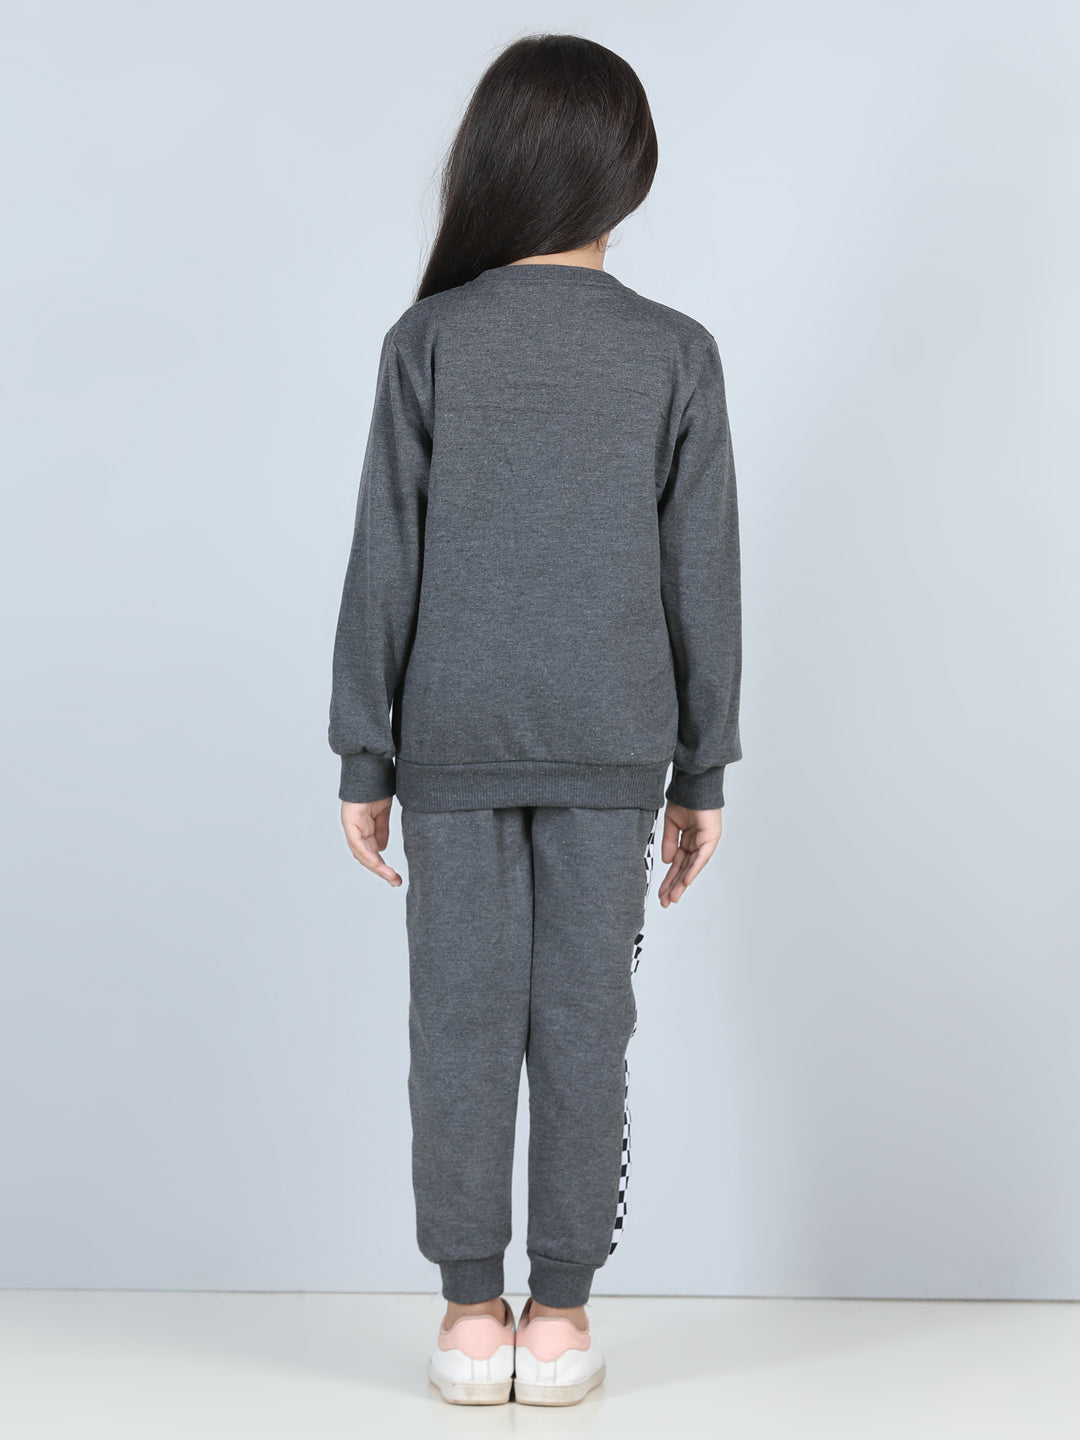 Cutiekins Lace insert Sweatshirt & Jogger Clothing Set -Grey